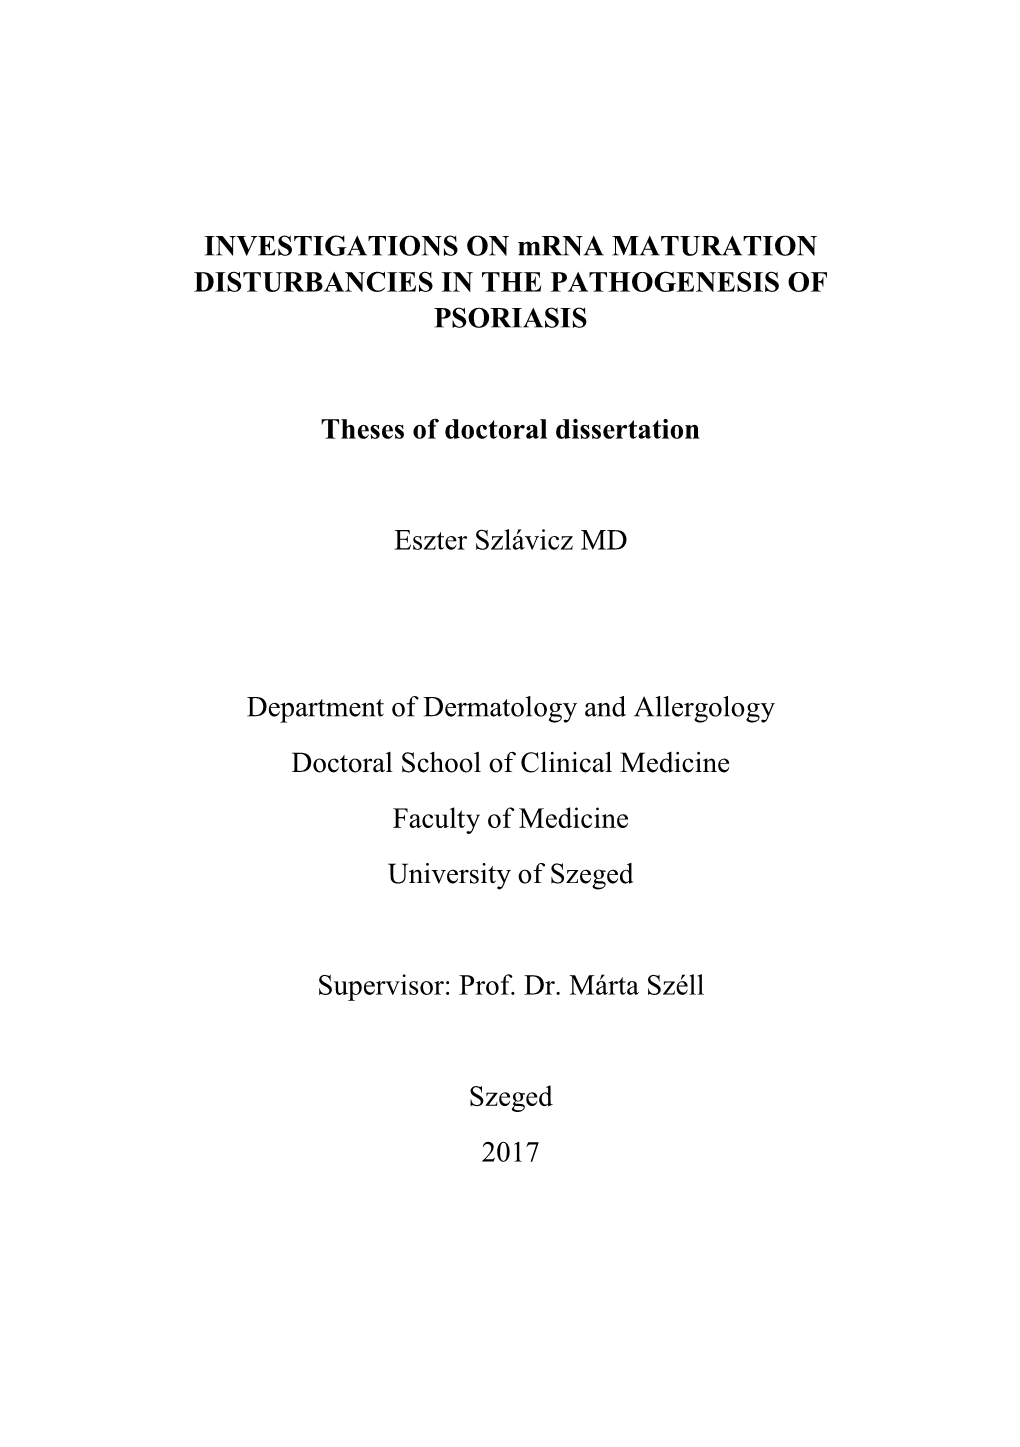 INVESTIGATIONS on Mrna MATURATION DISTURBANCIES in the PATHOGENESIS of PSORIASIS